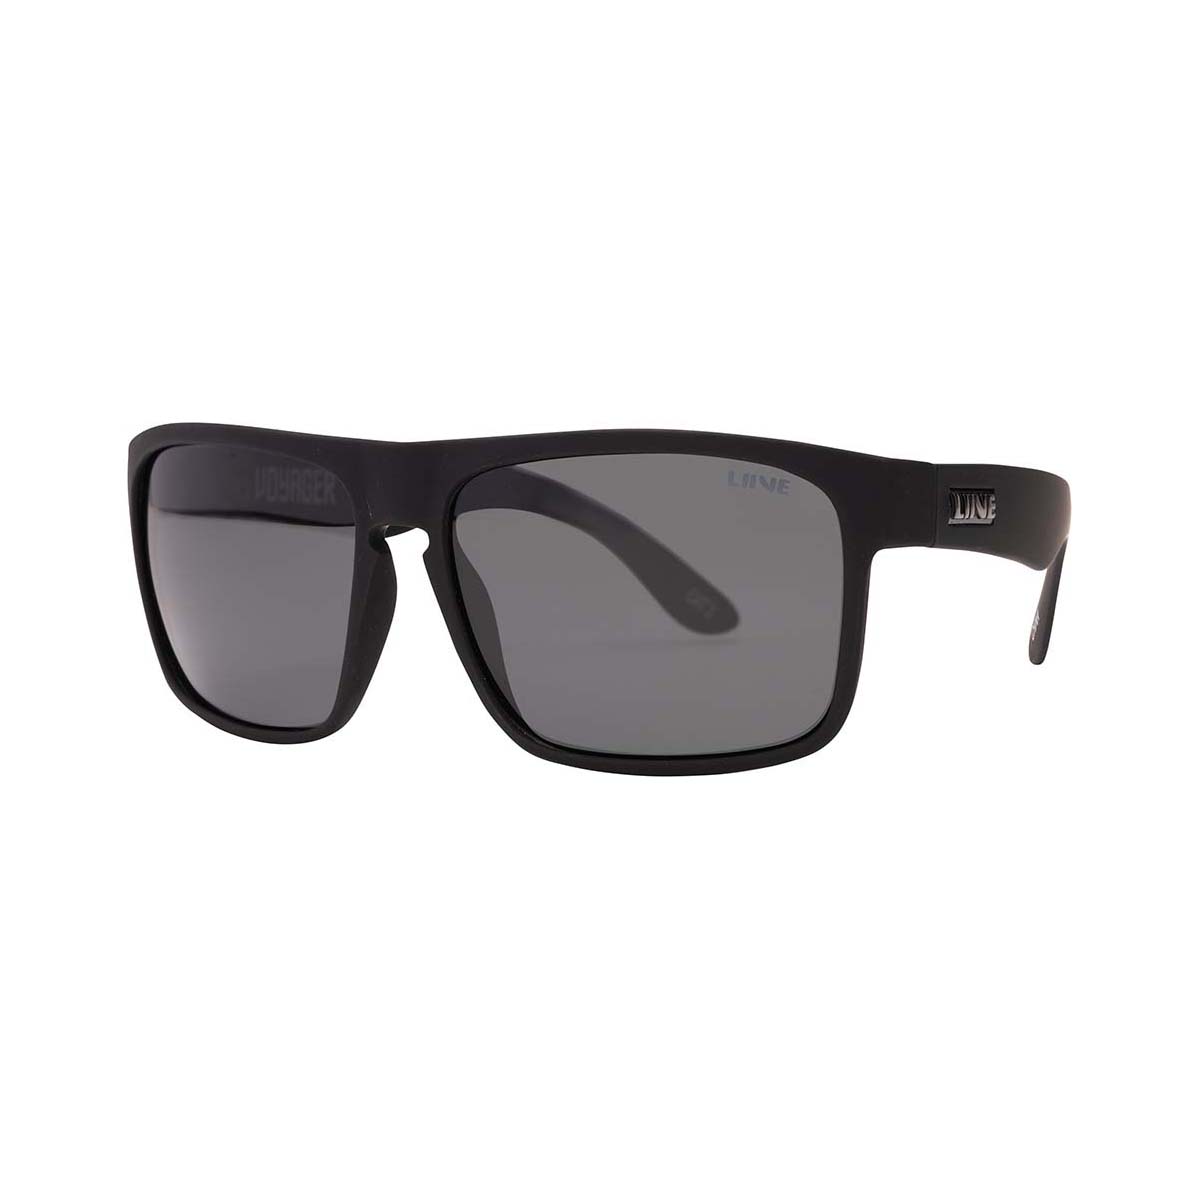 Liive Men's Voyager Polarised Sunglasses Matt Black with Grey Lens